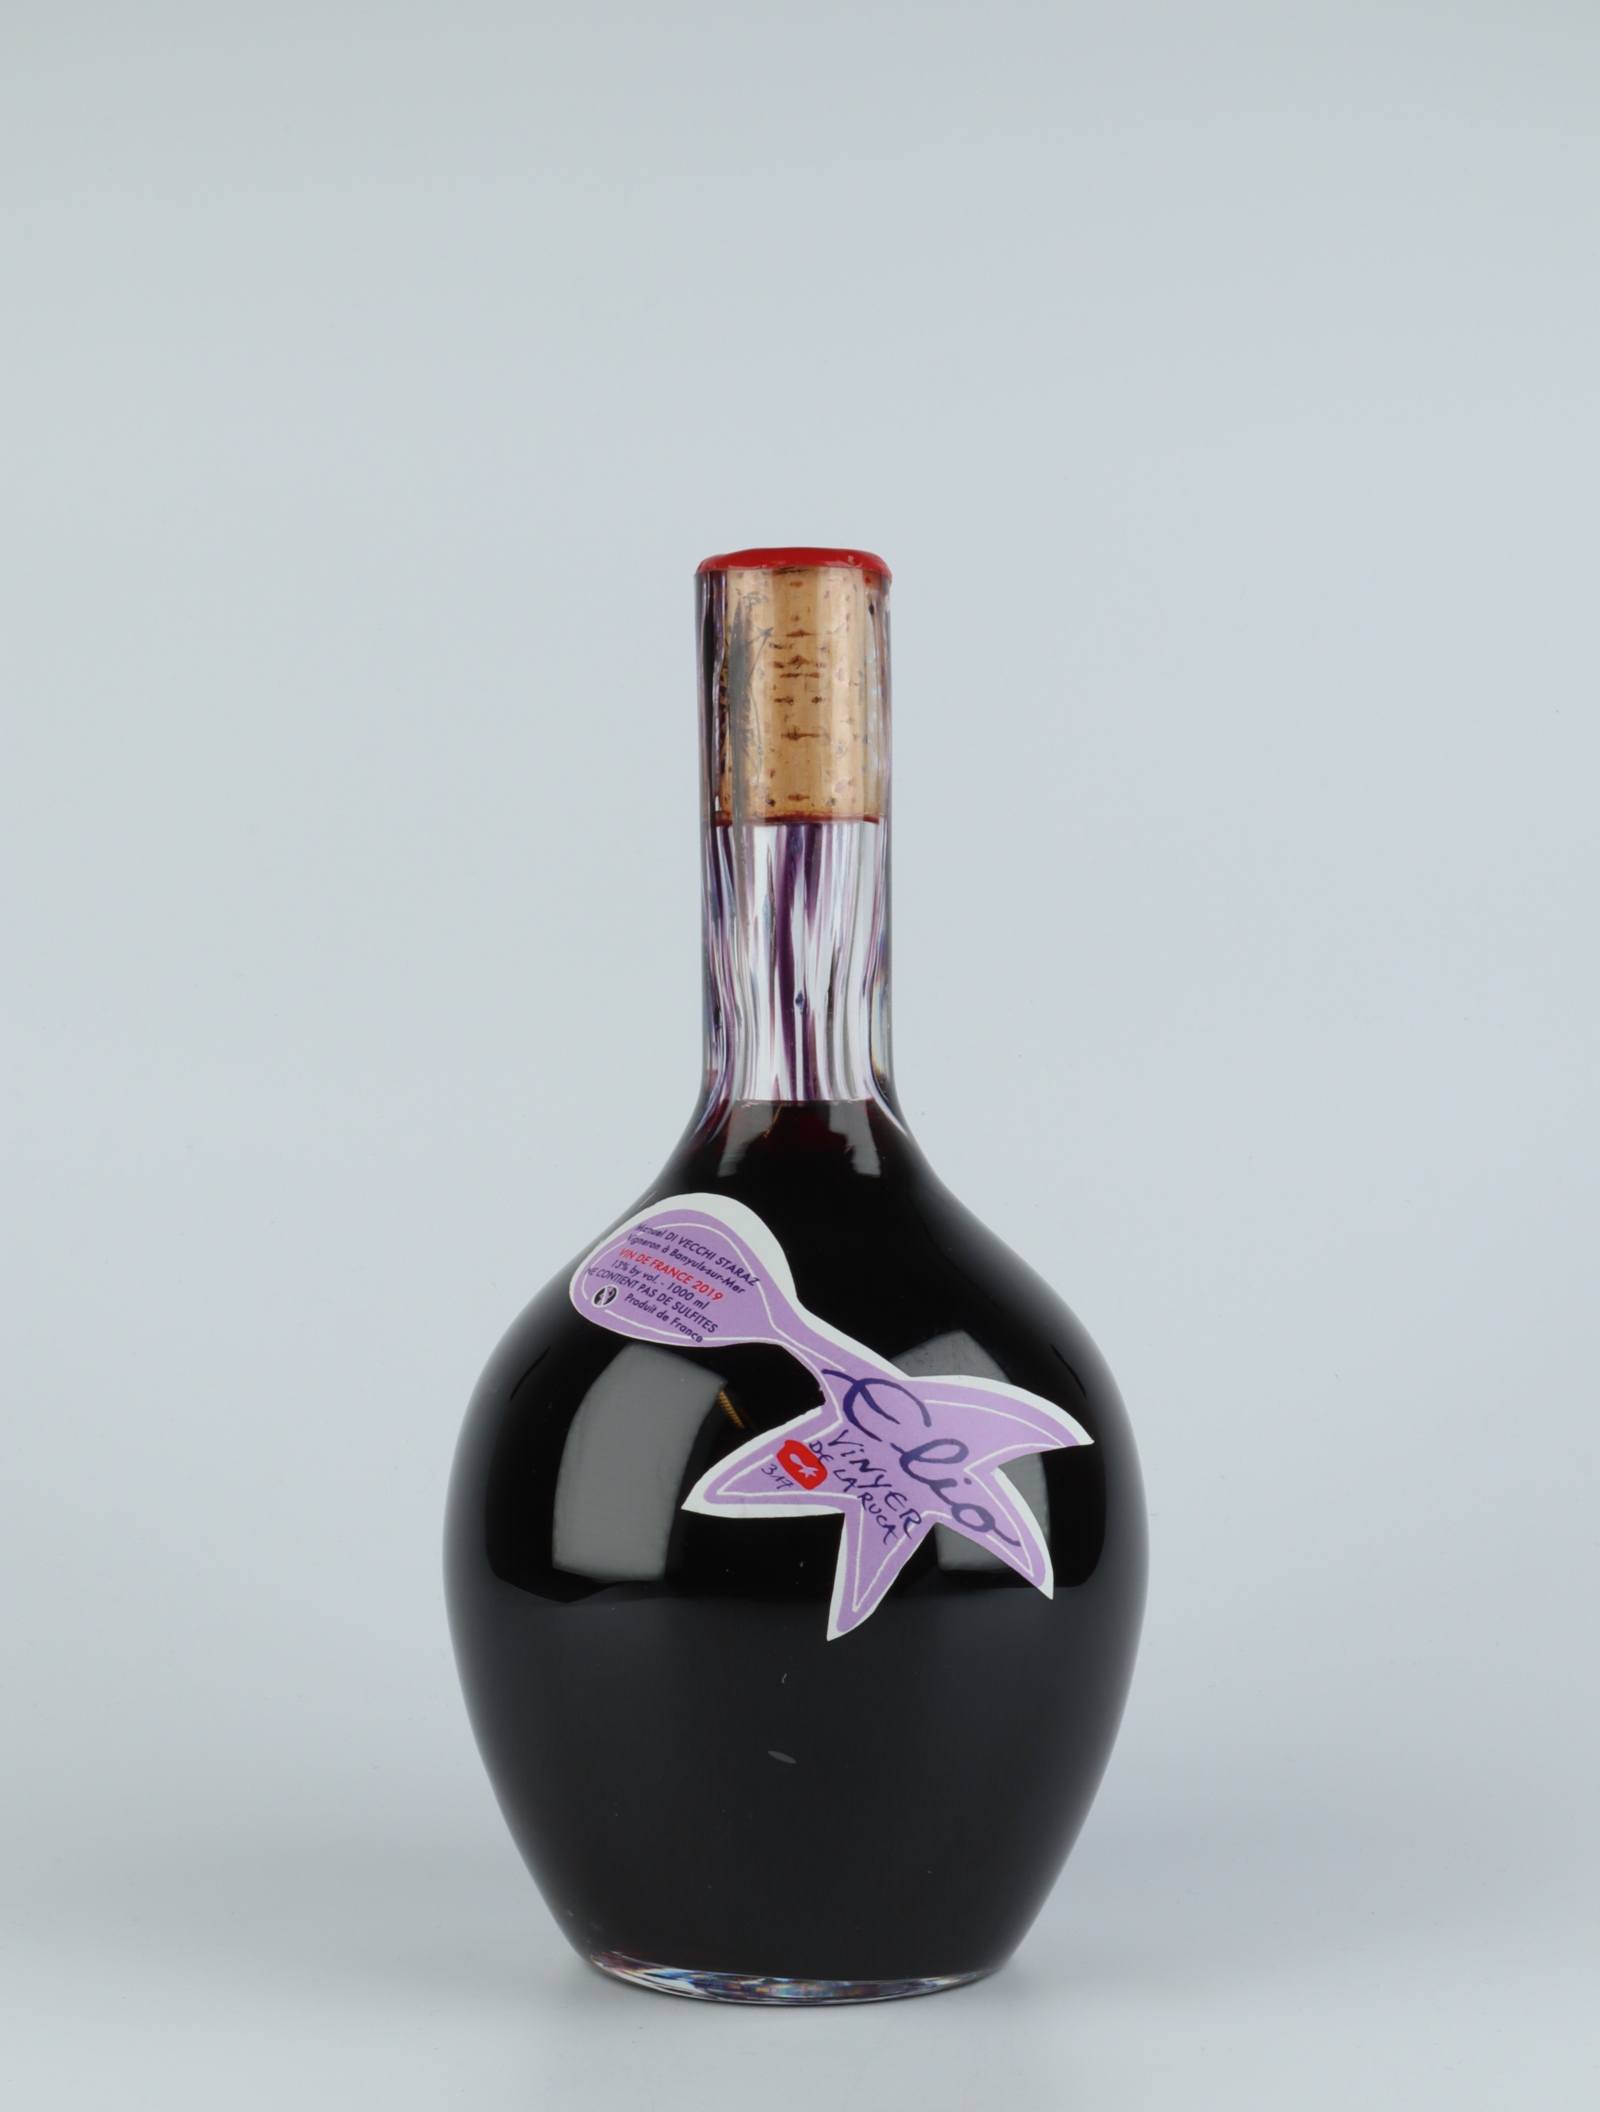 A bottle 2019 Elio Red wine from Vinyer de la Ruca, Rousillon in France